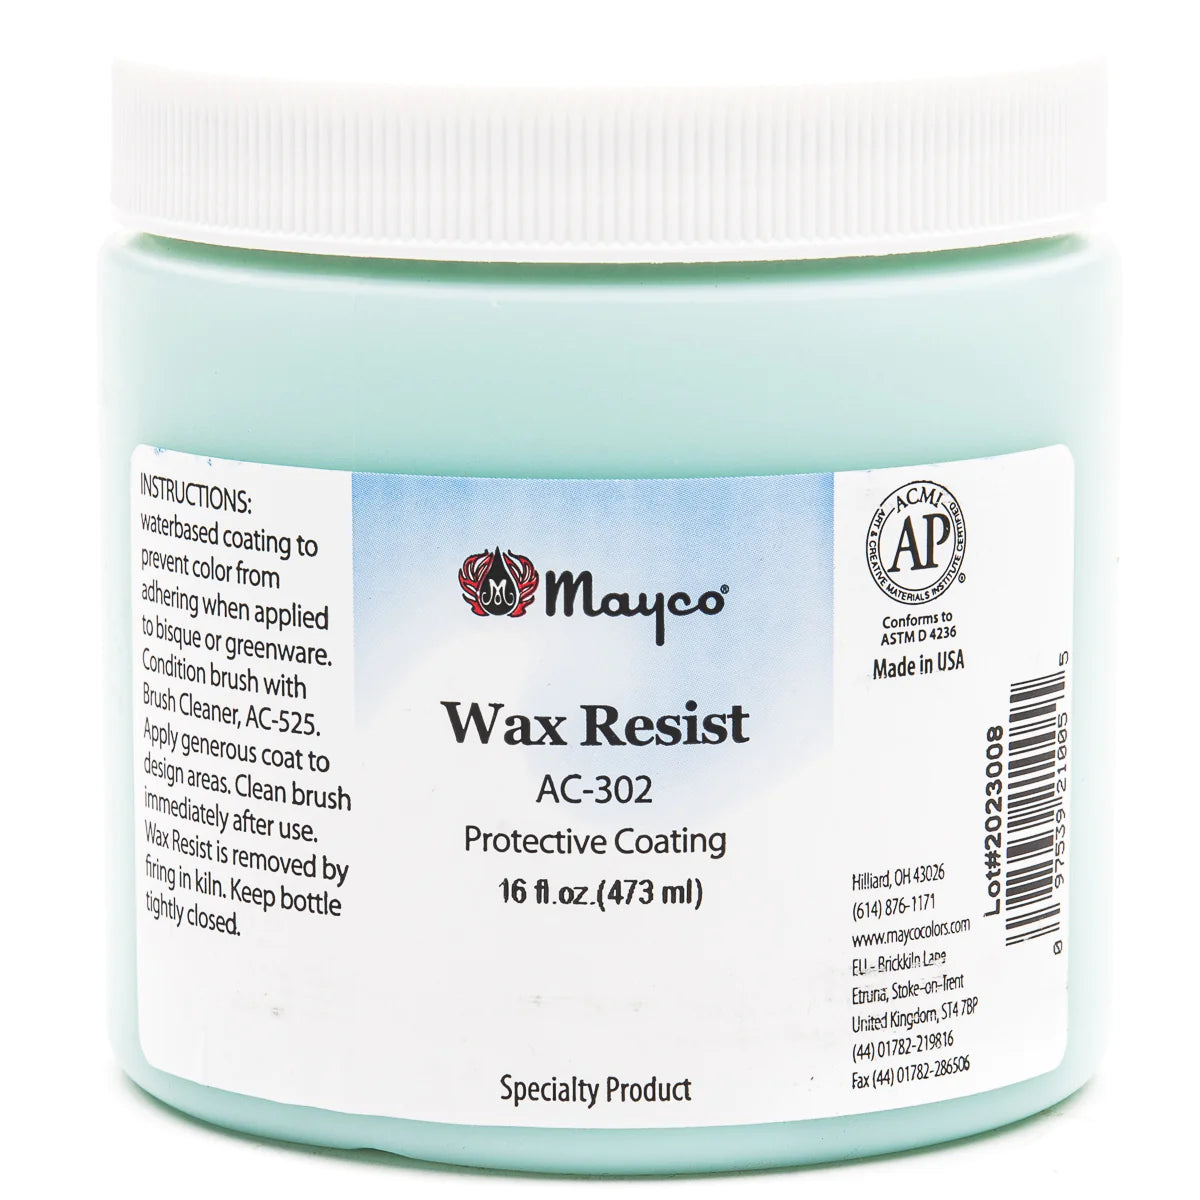 WAX RESIST